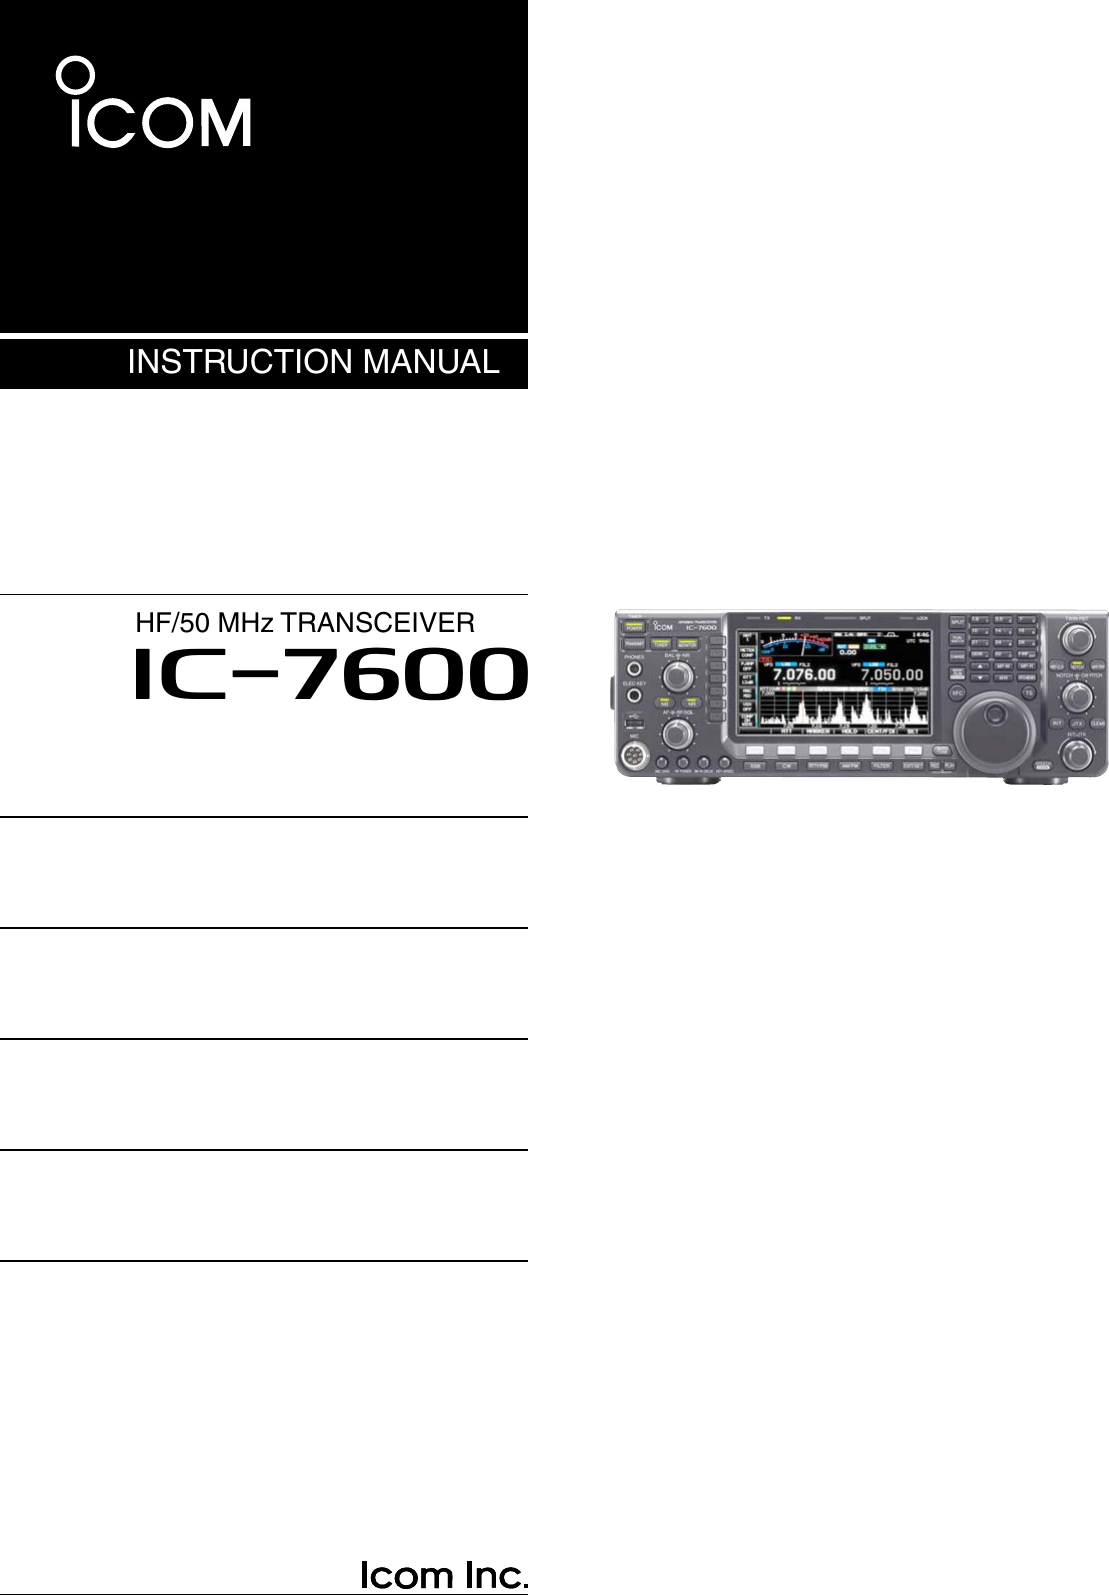 INSTRUCTION MANUALHF/50 MHz TRANSCEIVERi7600